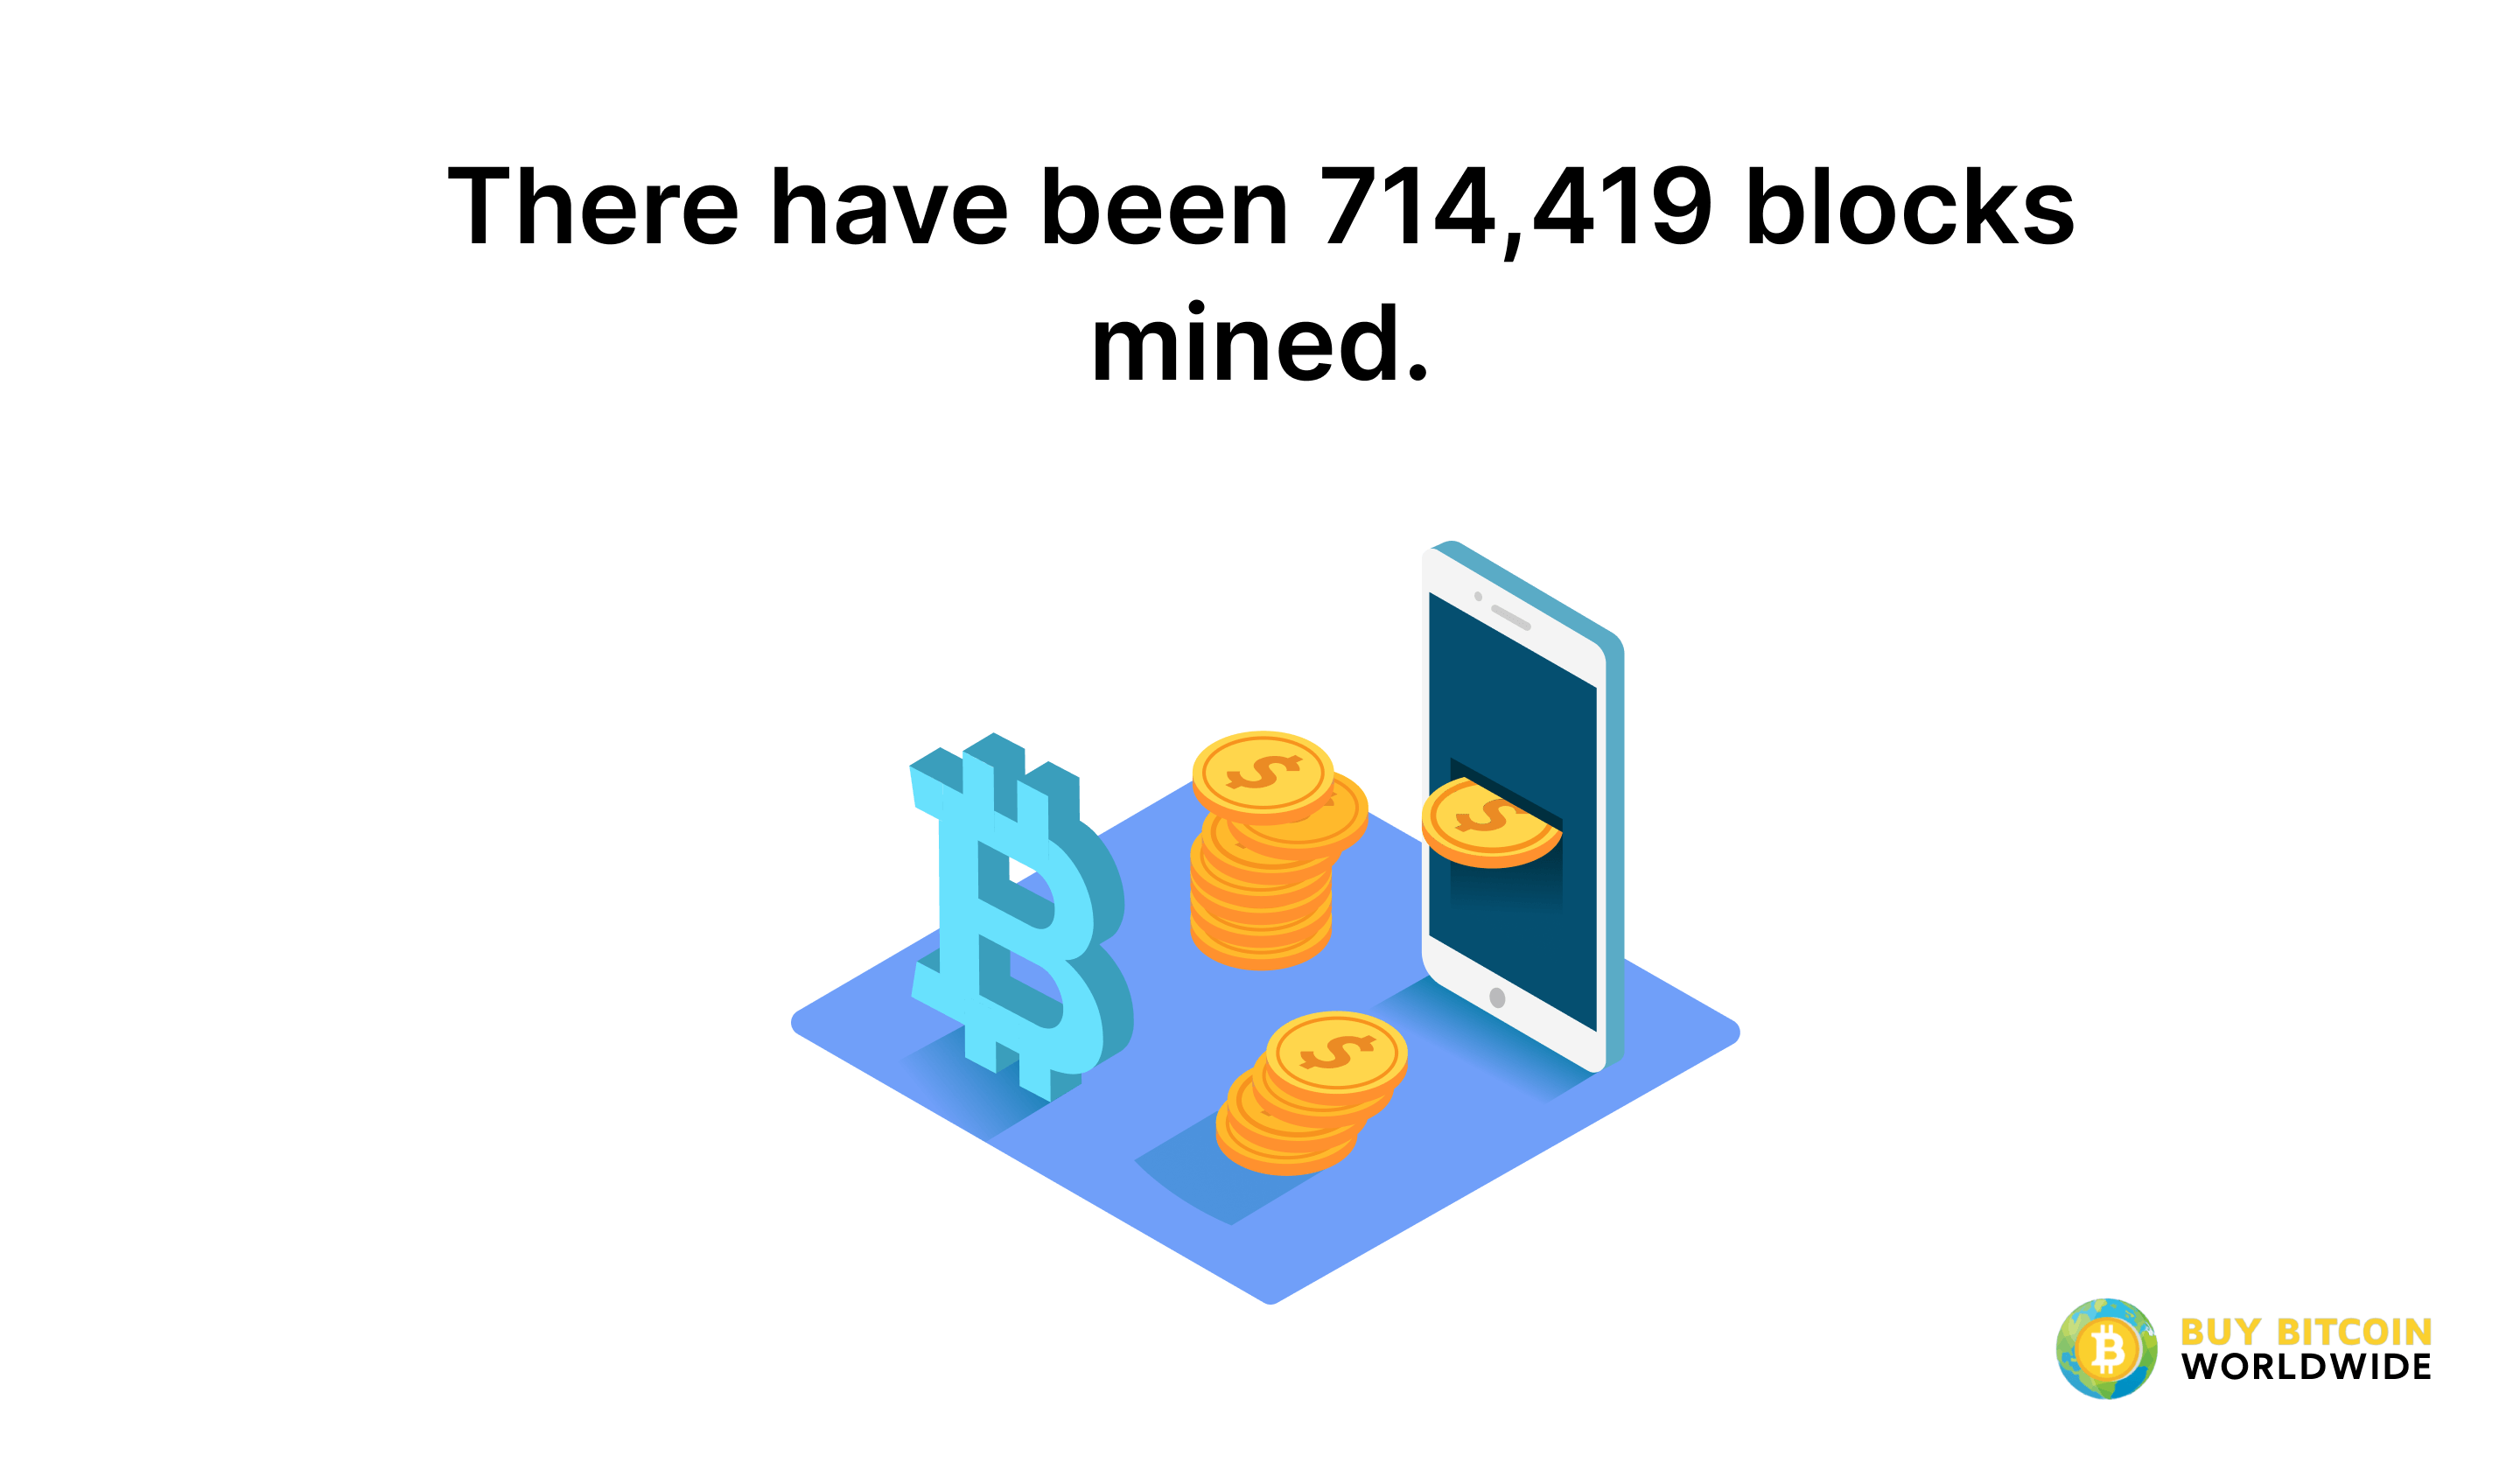 more than 700,000 bitcoin blocks mined